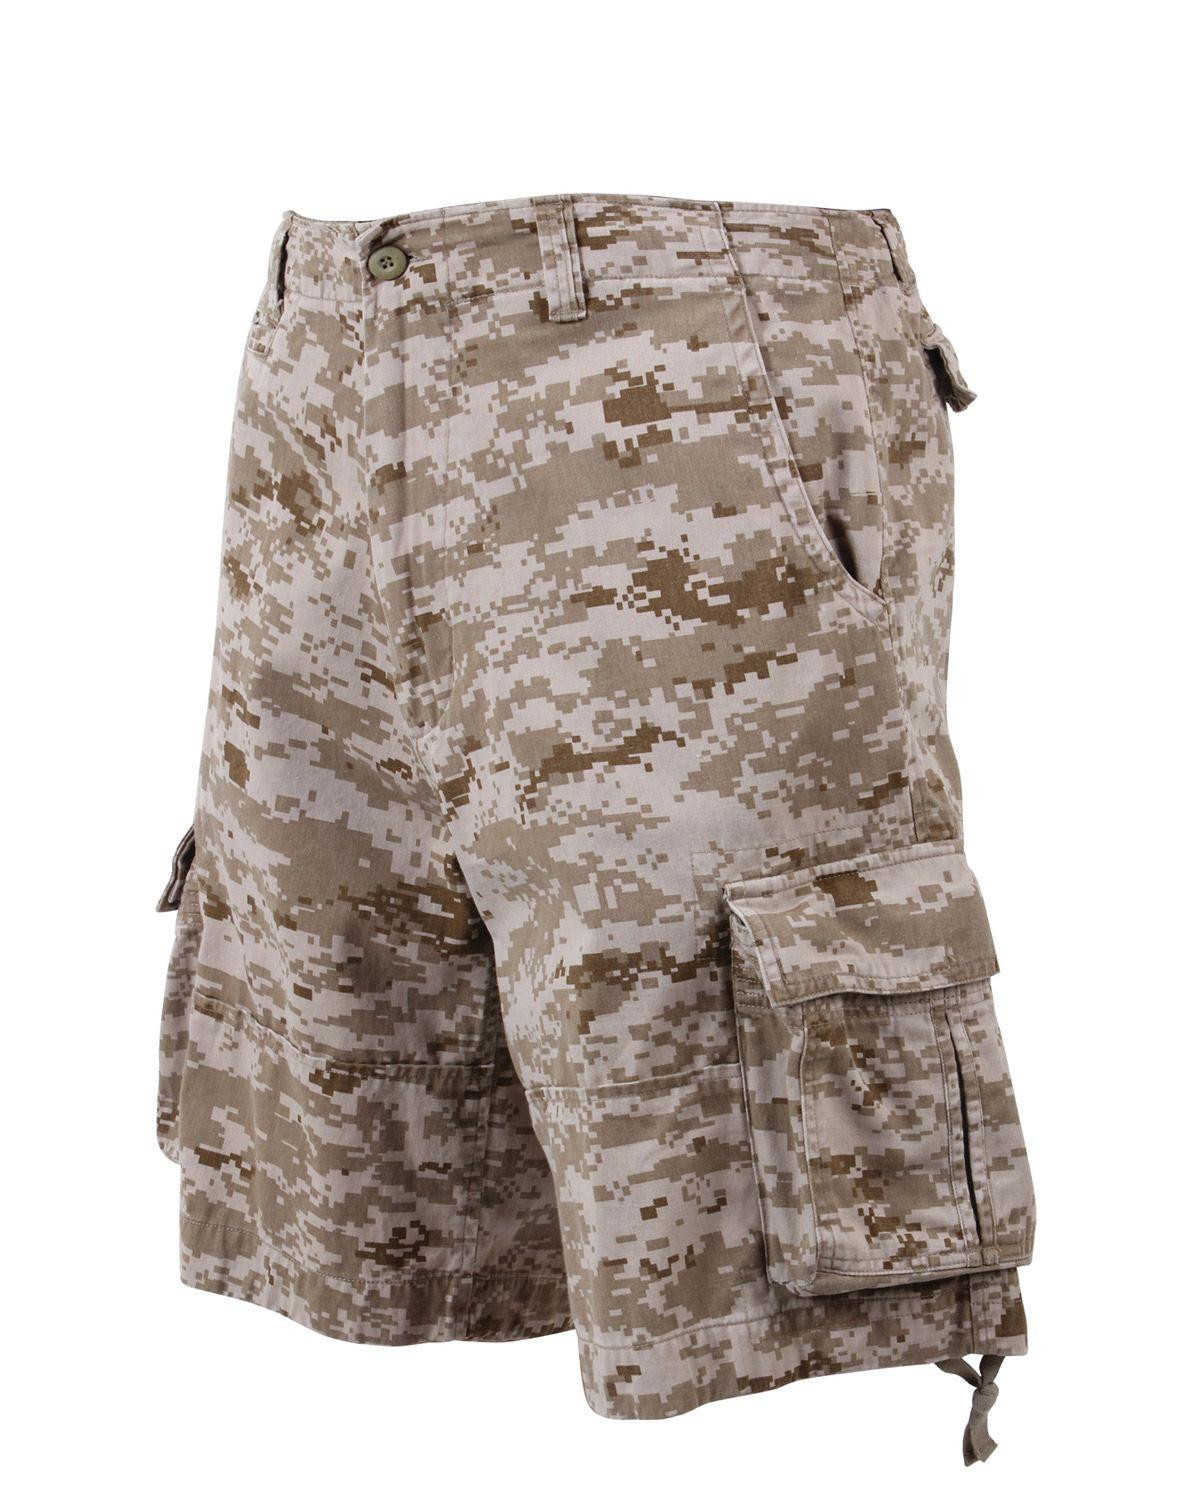 Rothco Vintage Infantry Shorts (Desert Digital Camo, XS)